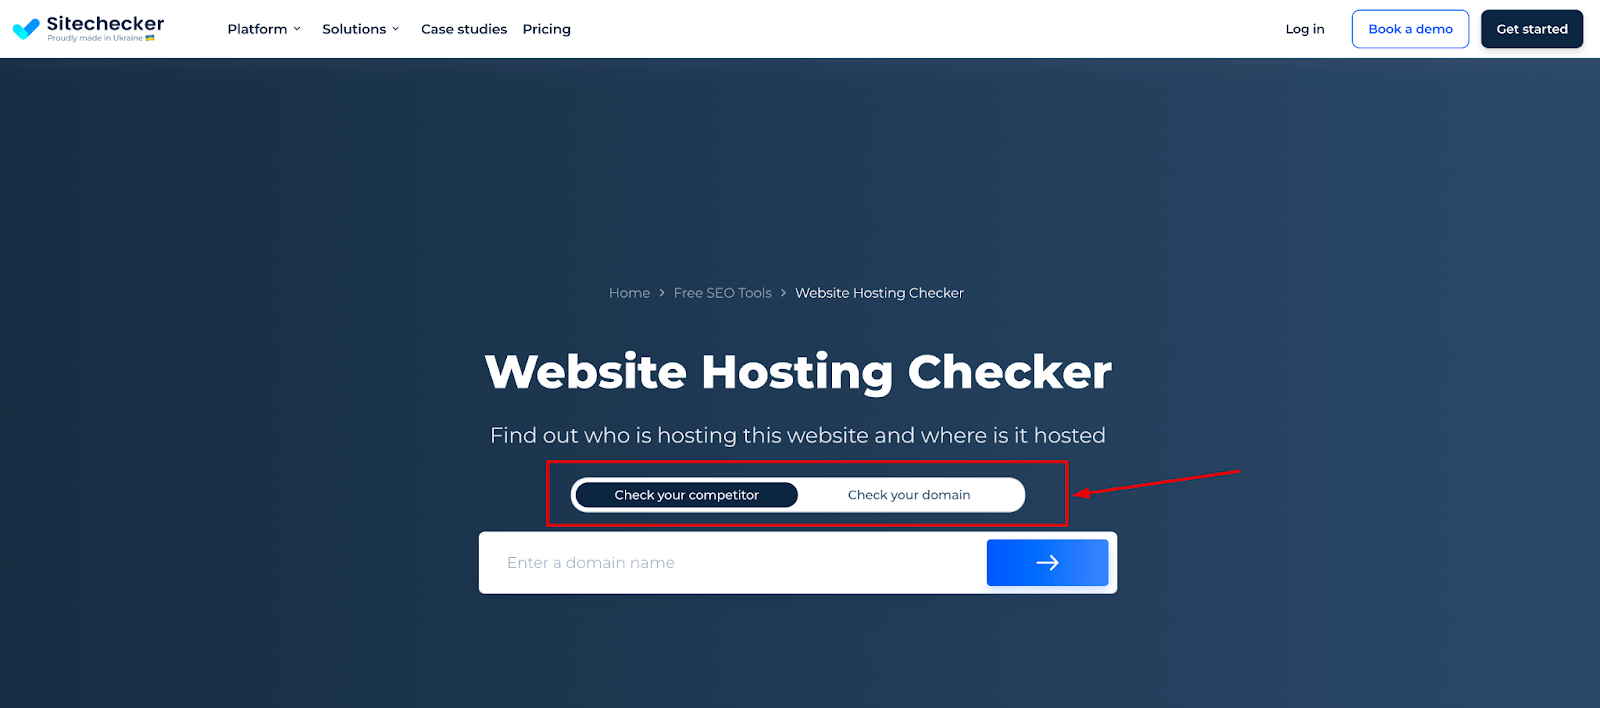 Website Hosting Checker